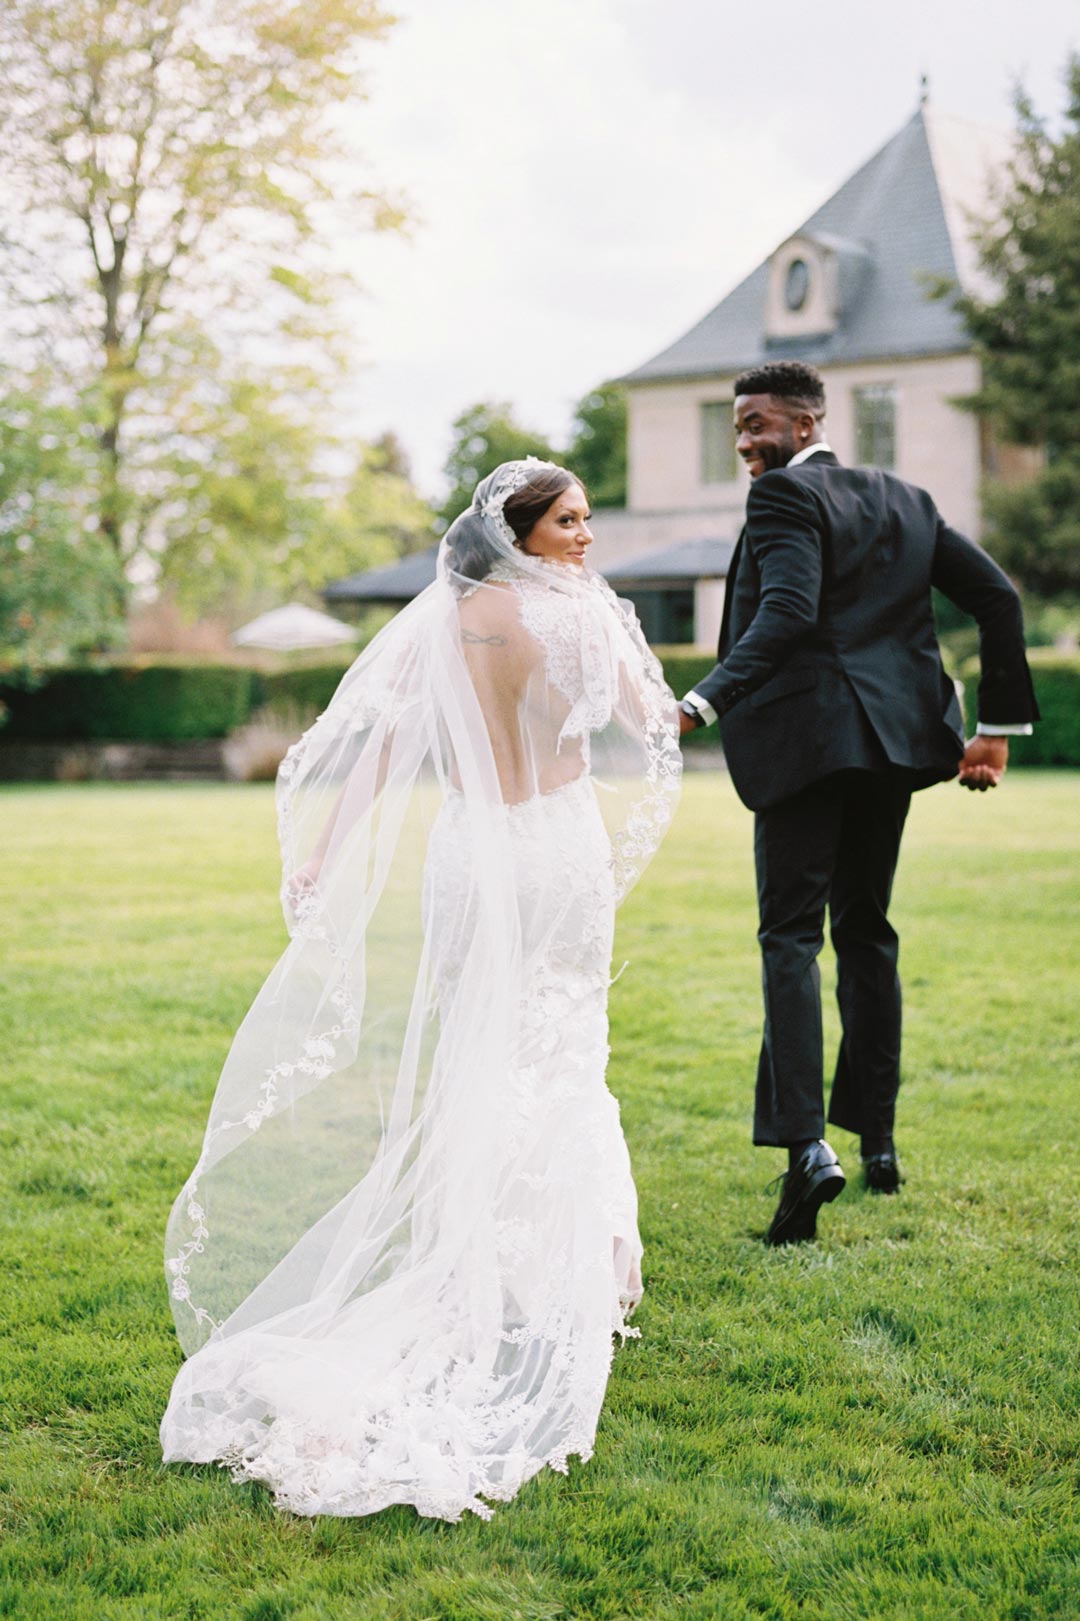 Bride in Grace Scoop Back Design Wedding Dress wear veil running on grass with Groom in Tux